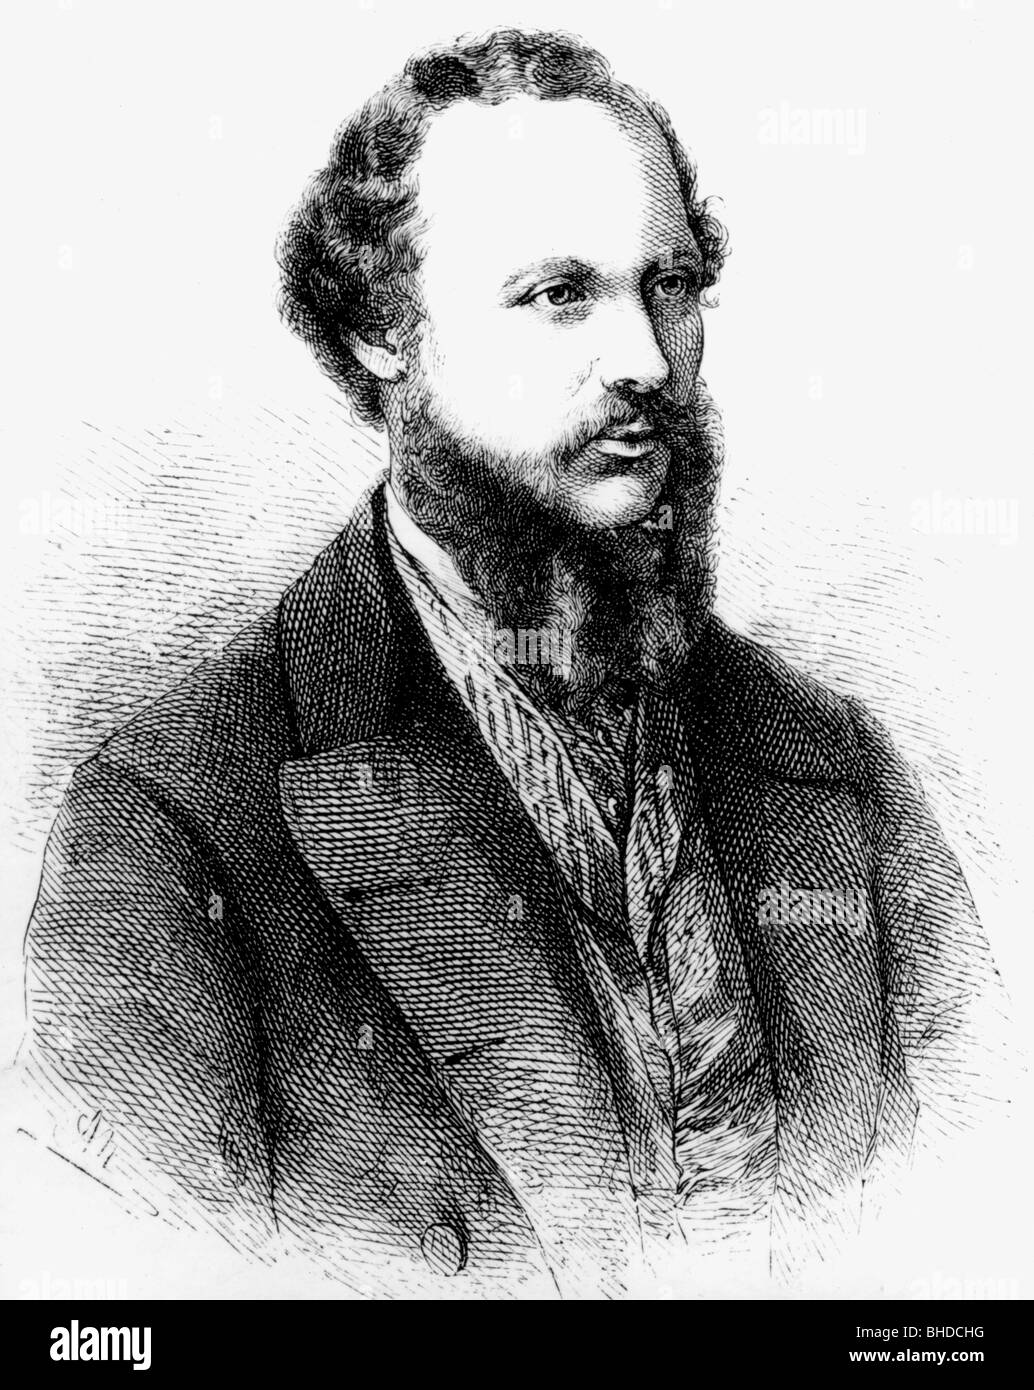 Kelvin of Largs, Lord William Thompson, 26.6.1824 - 17.12.1907, English physicist, portrait, wood engraving, 19th century, Stock Photo